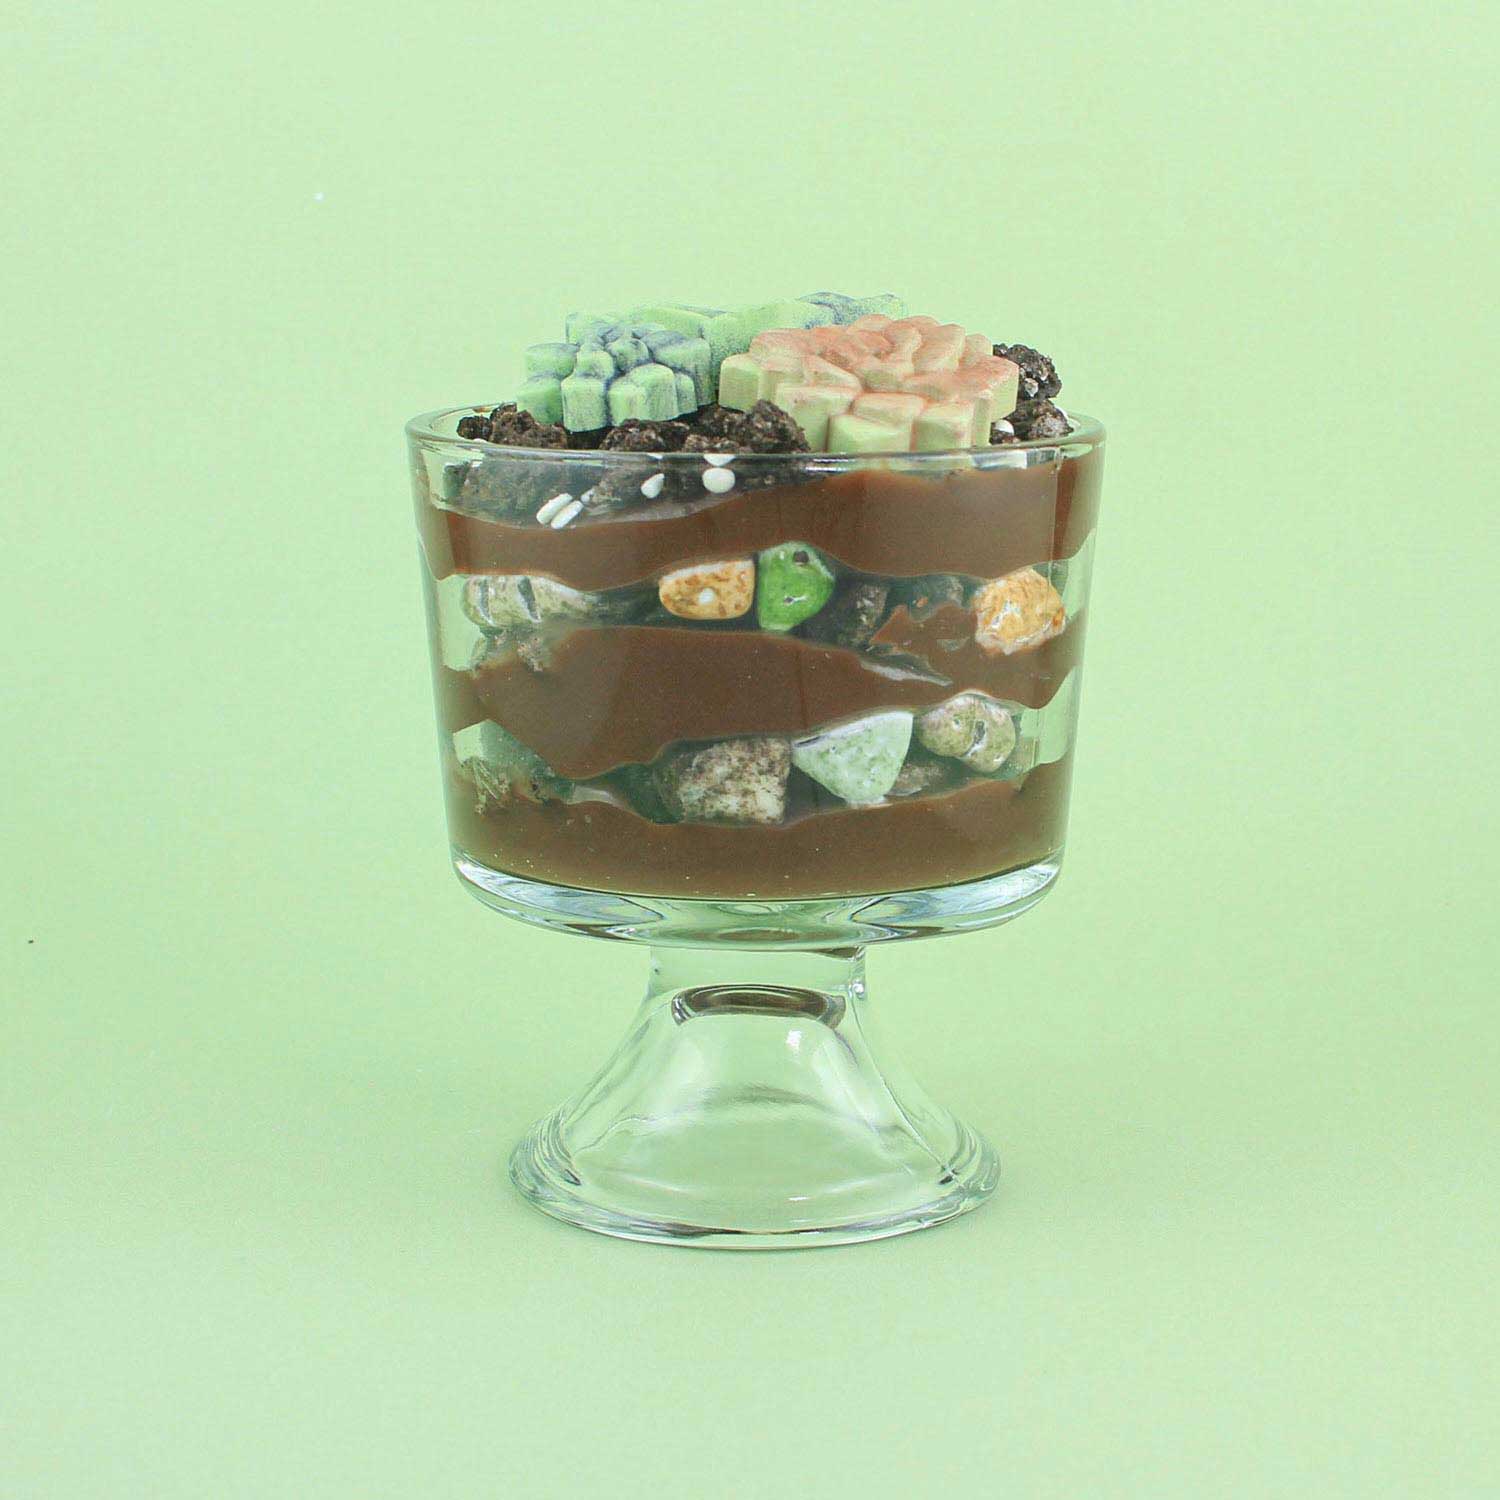 Chocolate River Chipped Rocks Cake & Desert Decoration Edible Rocks - 6oz